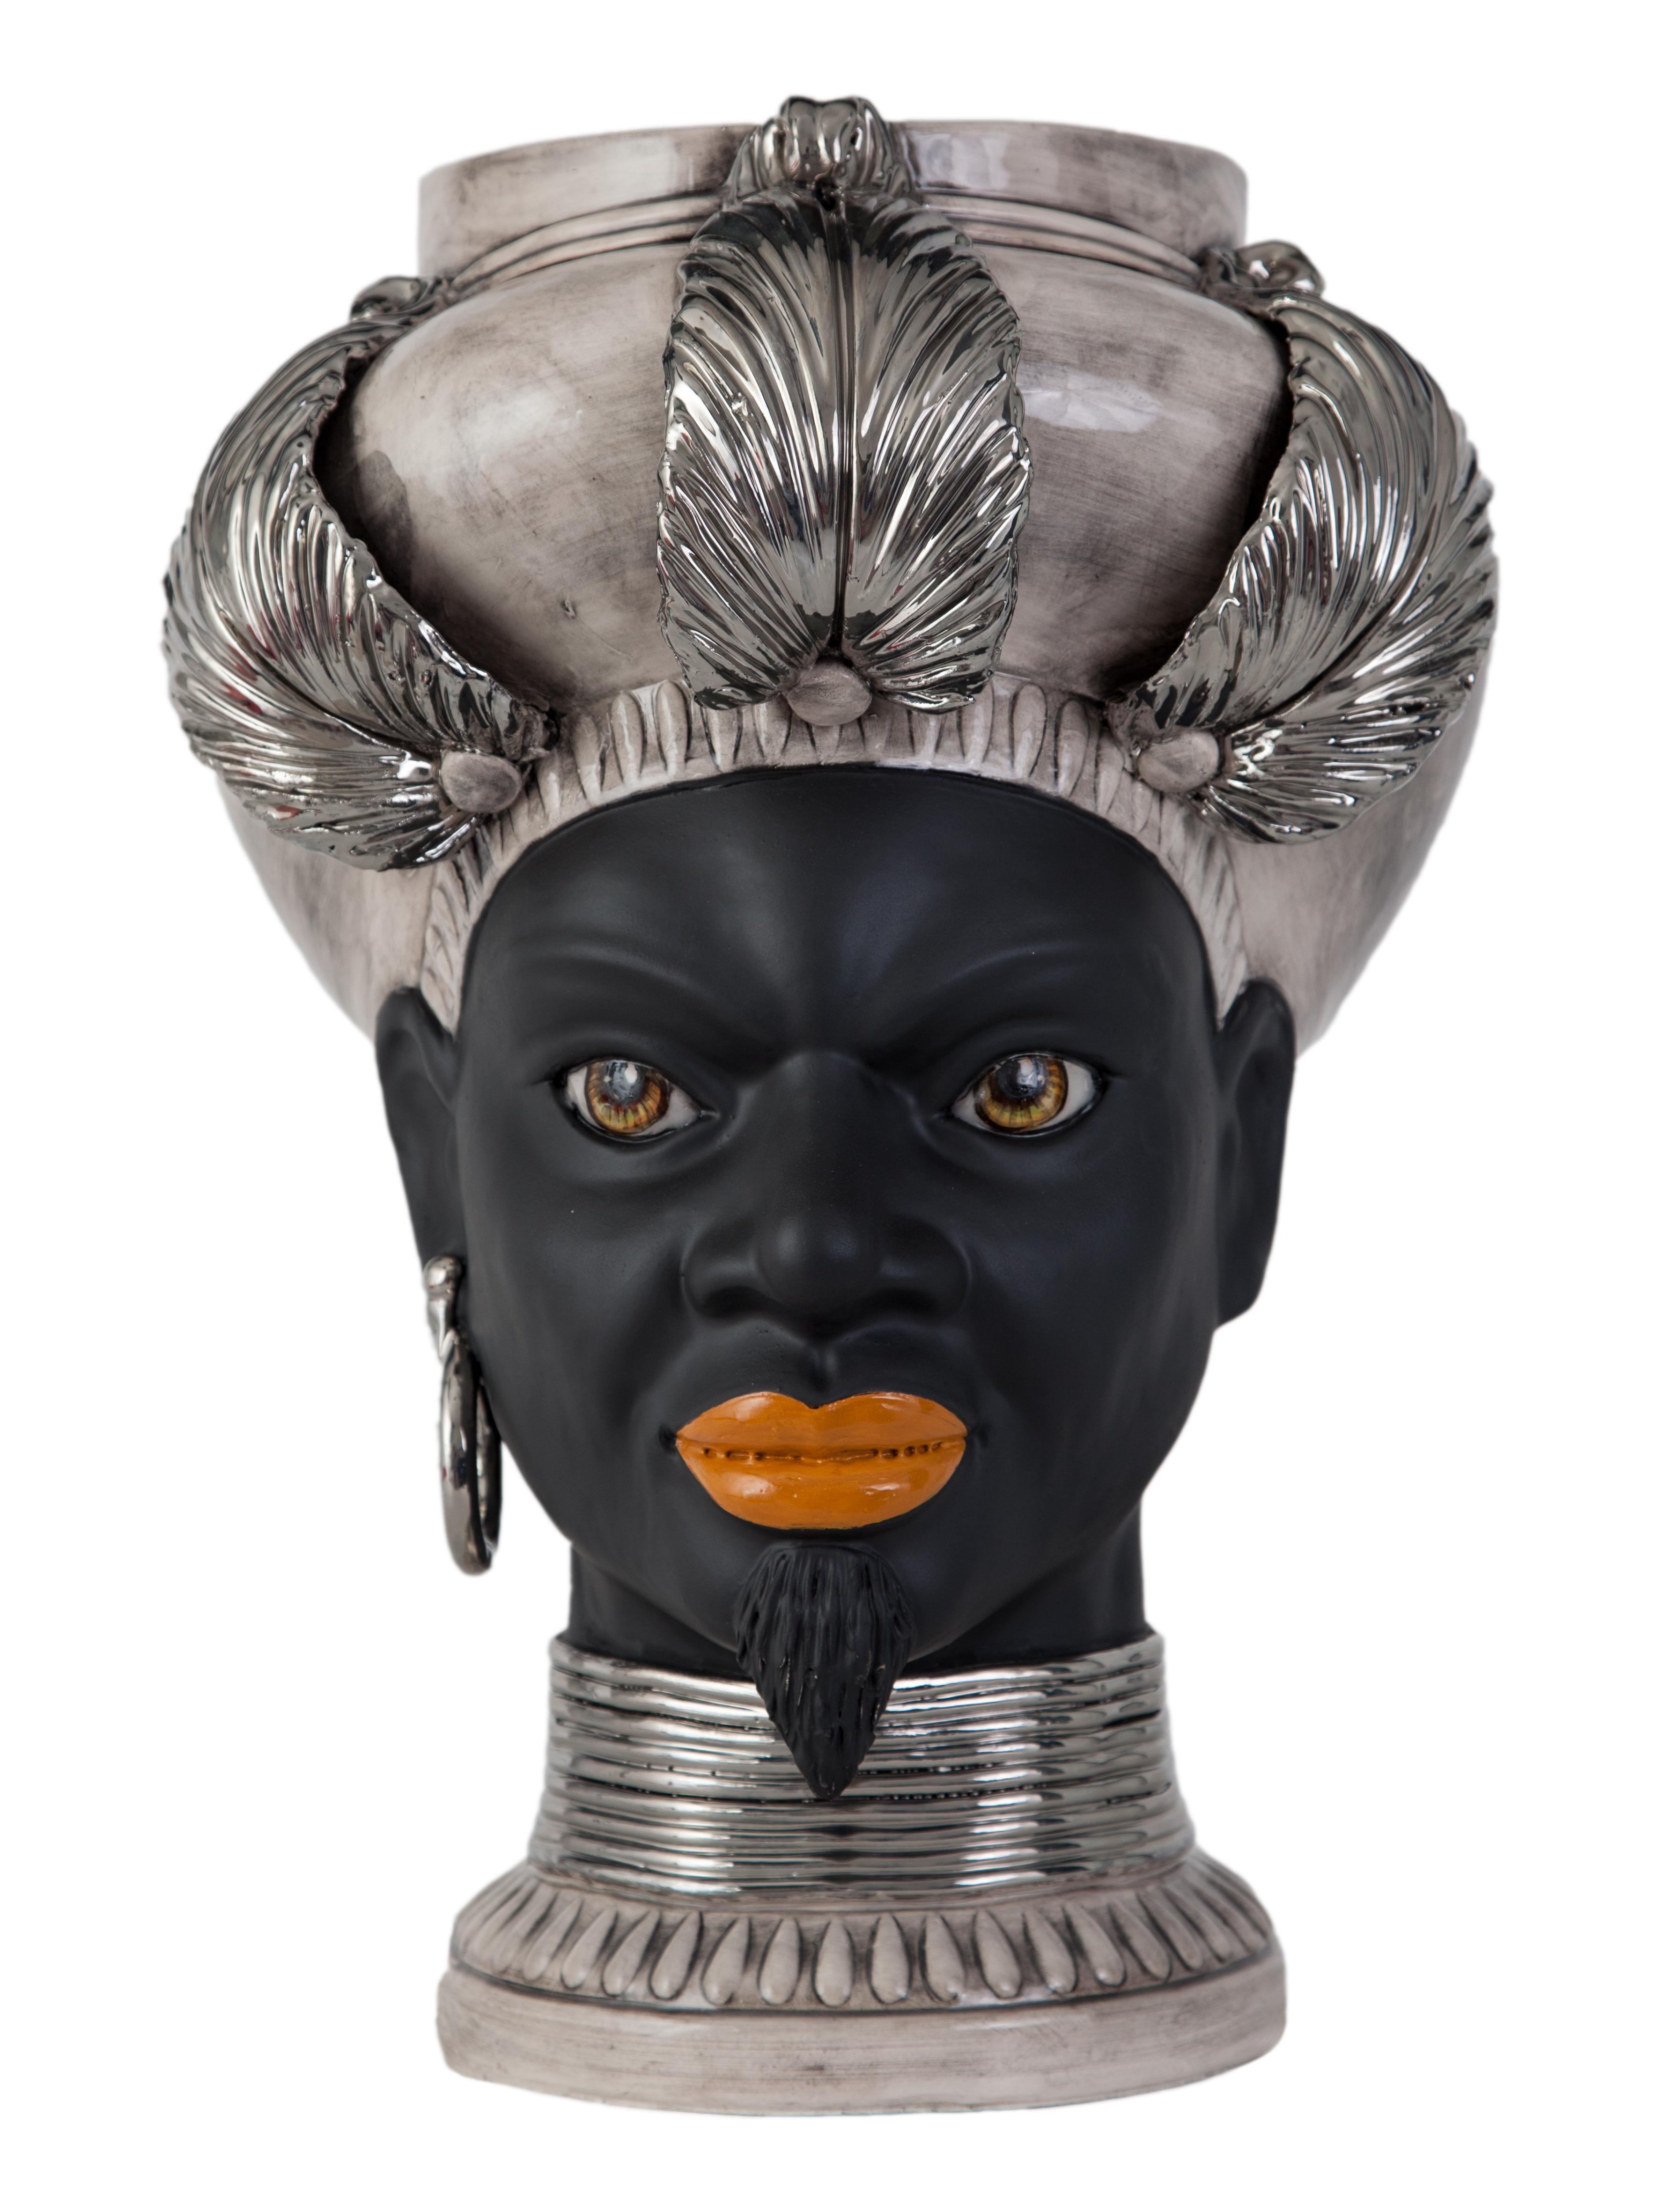 ISIDE I21, Man's Moorish Head, Handmade in Sicily, 2021, Golden, Size L For Sale 11